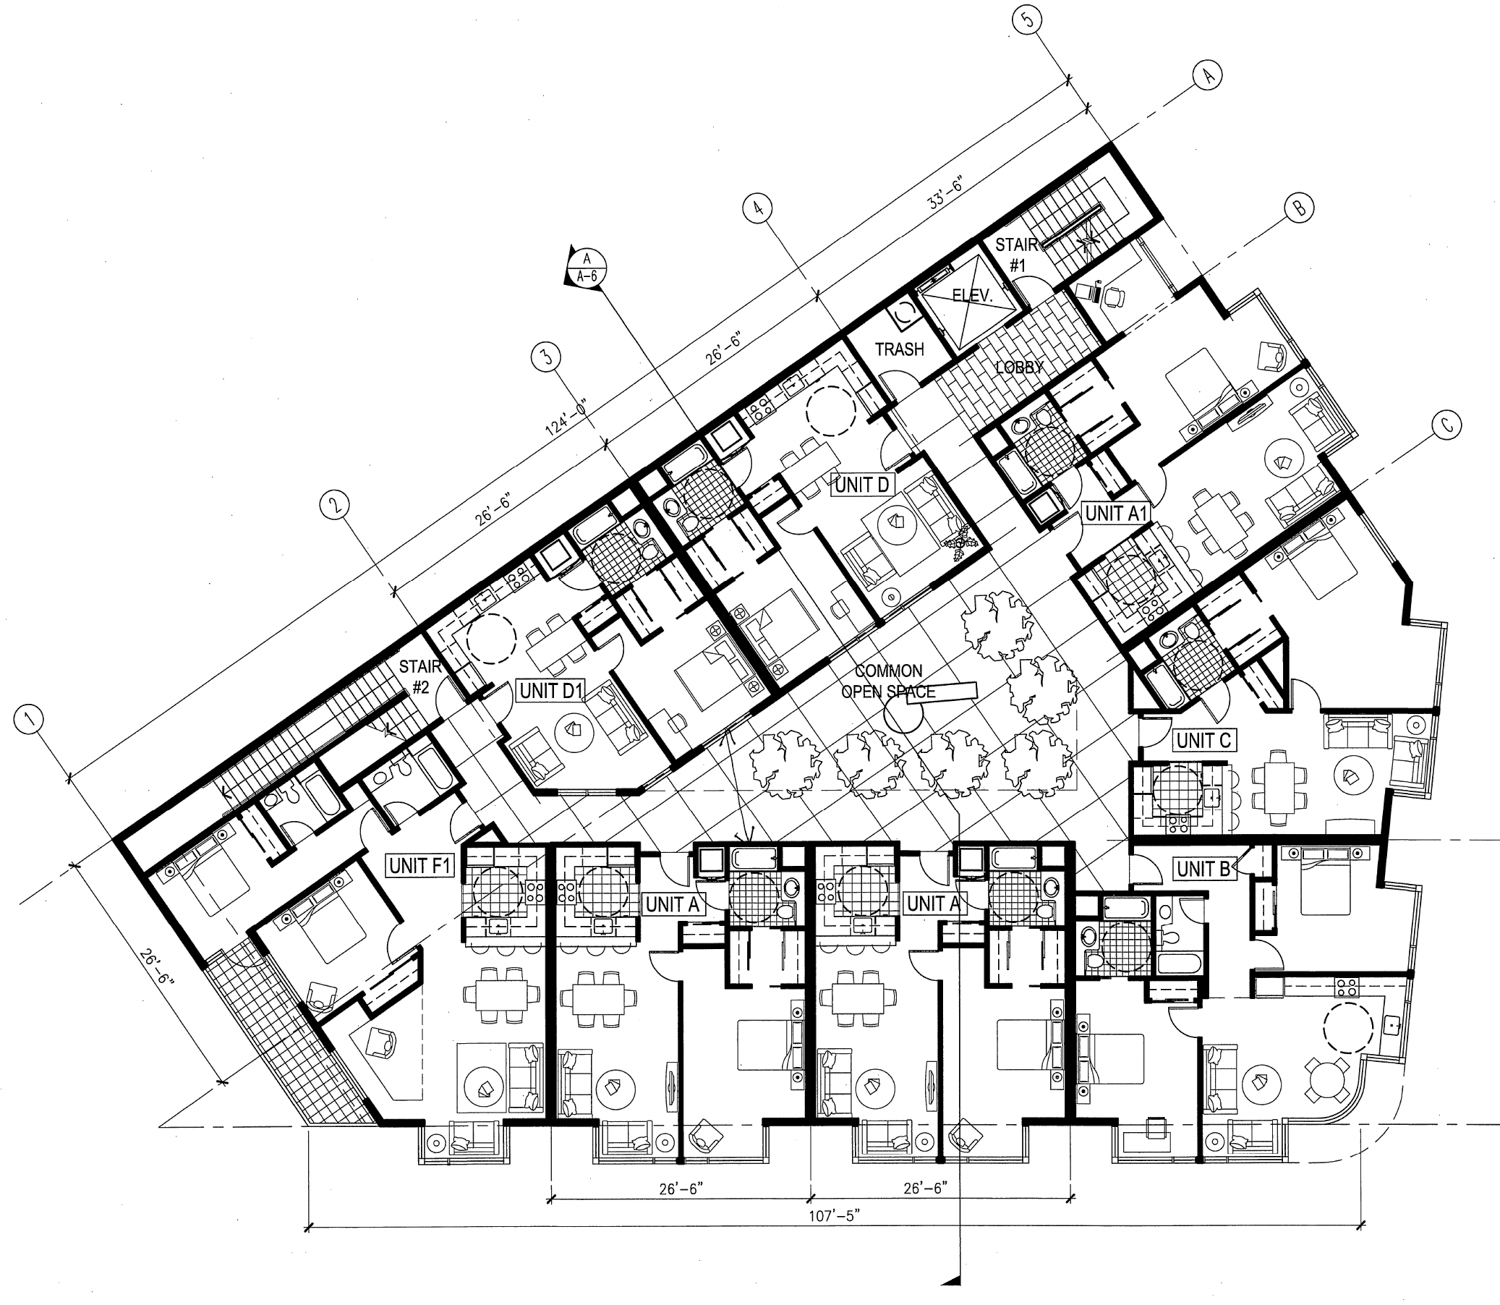 2311 San Pablo Avenue floor plan, 2007-era illustration reshared in 2020, design by Dinar & Associates